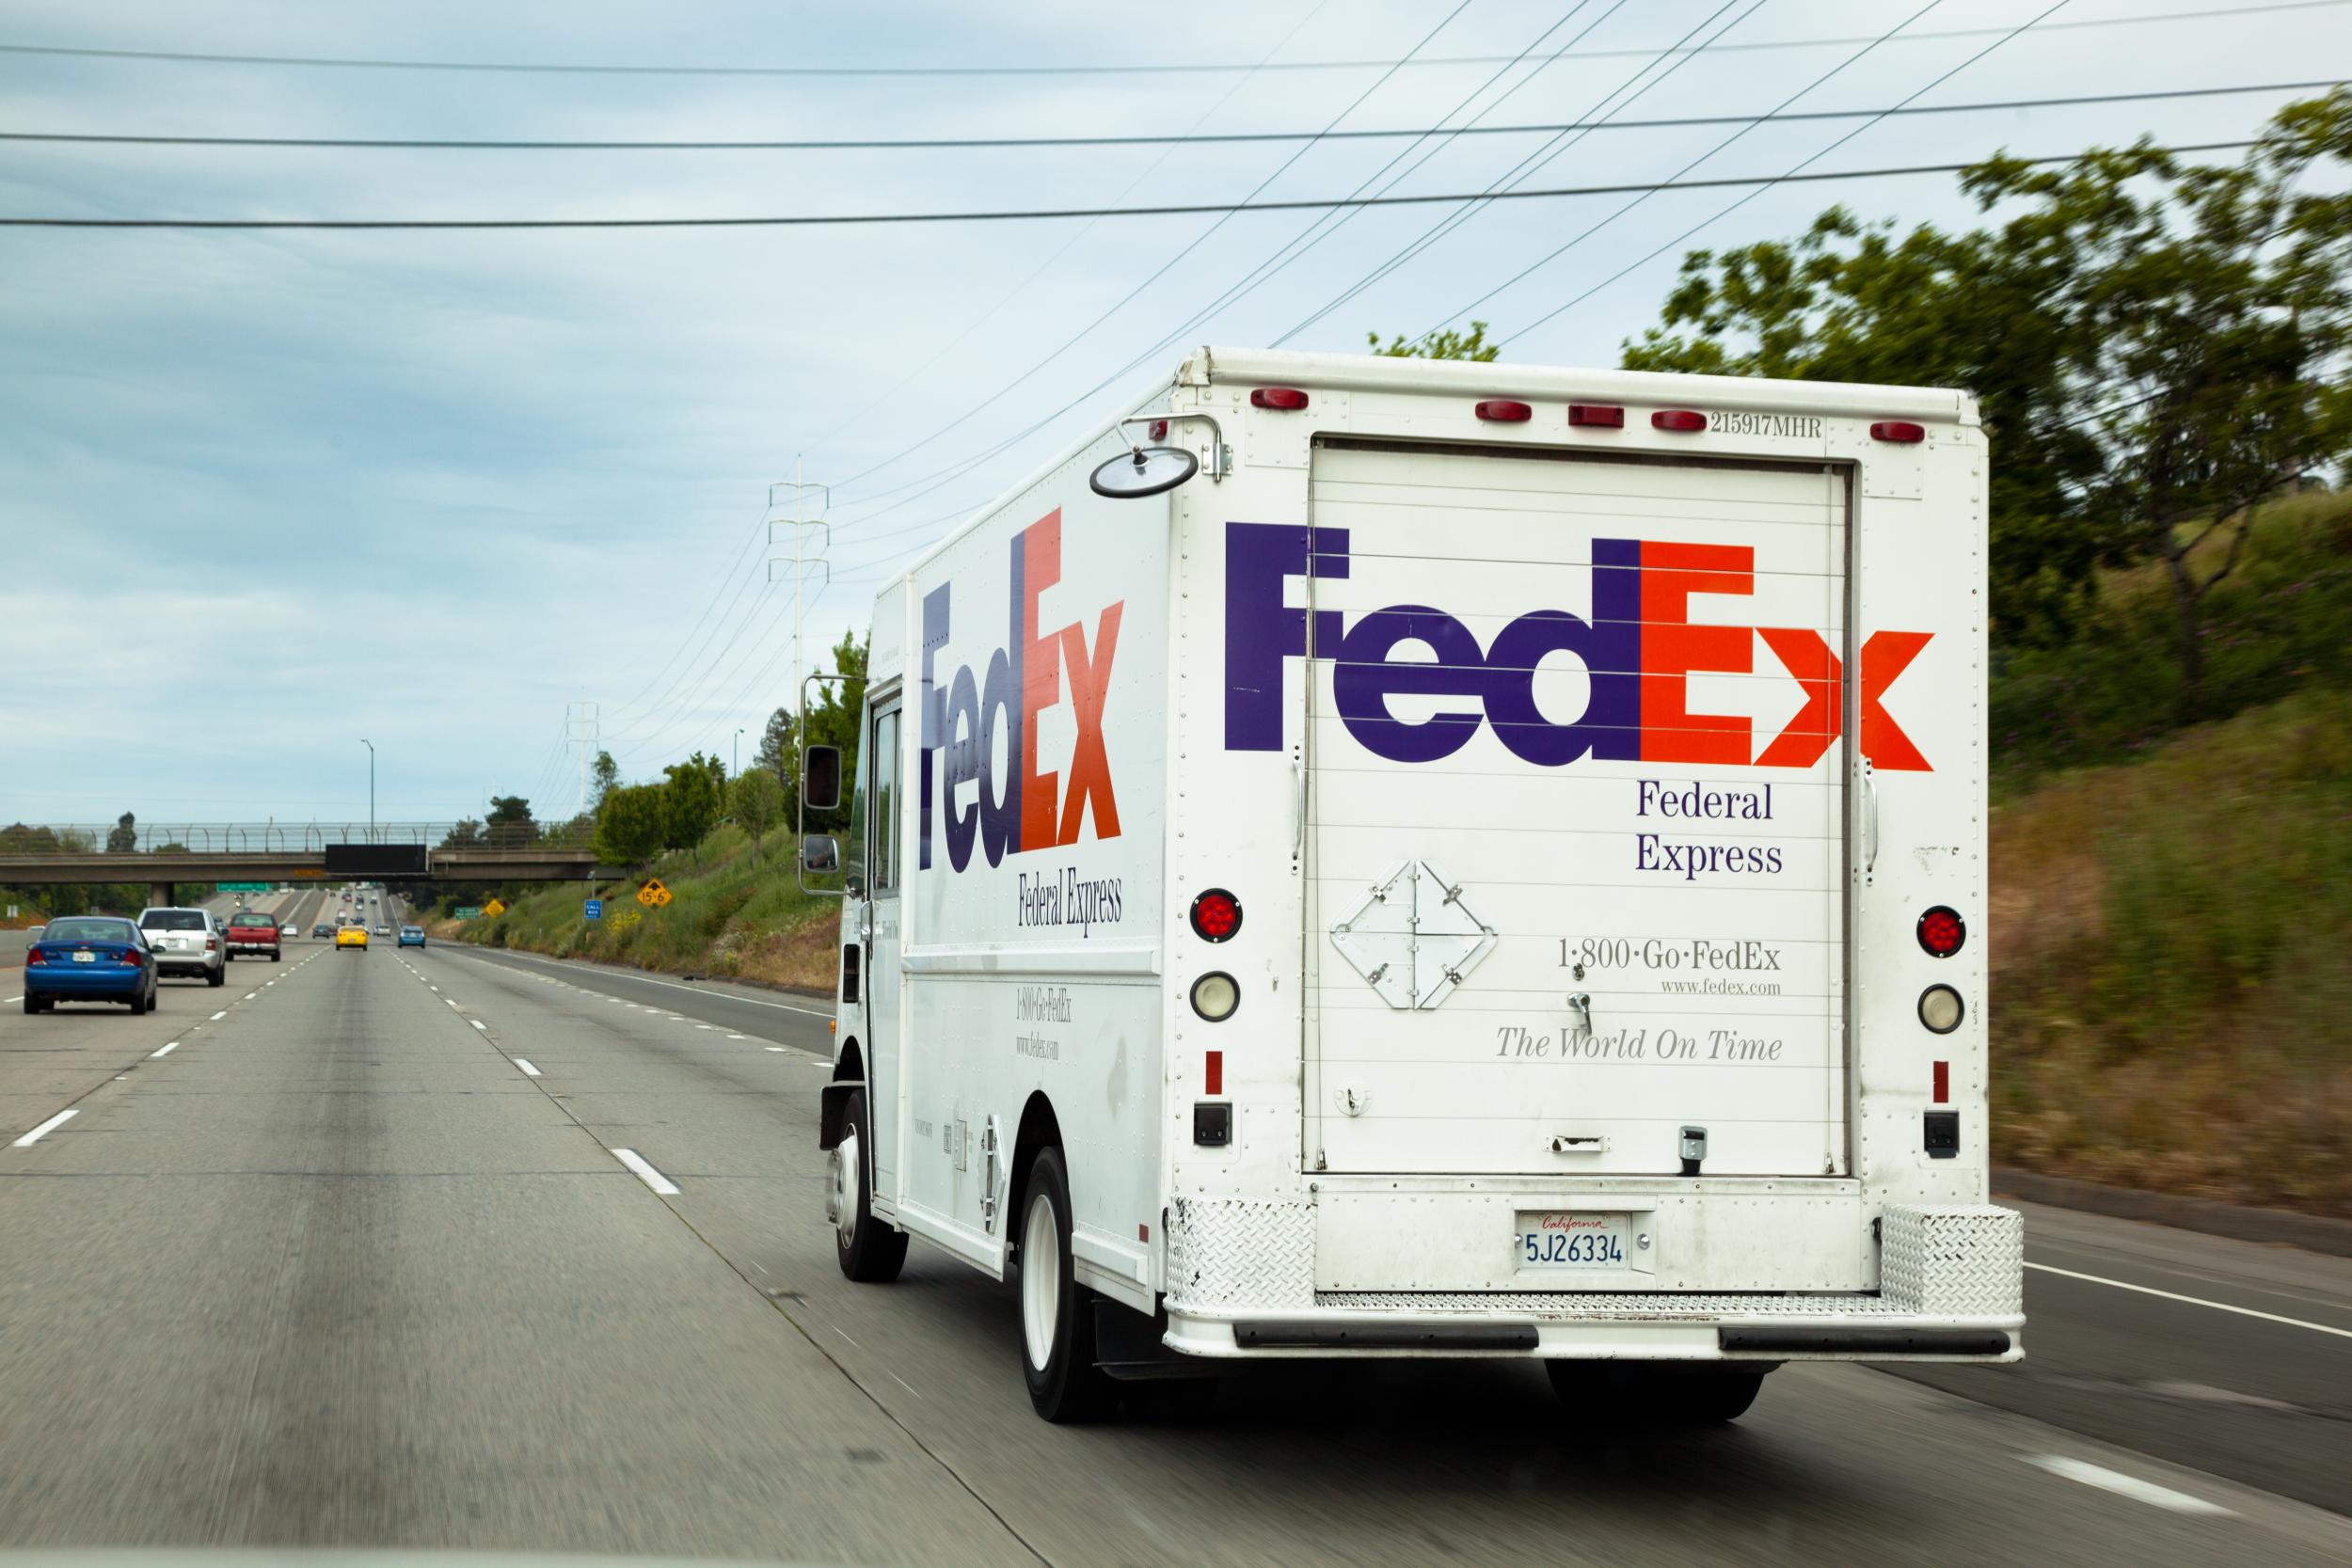 Timothy Warren was driving his FedEx van through Portland, Oregon, when Joseph Magnuson began shouting at him to slow down